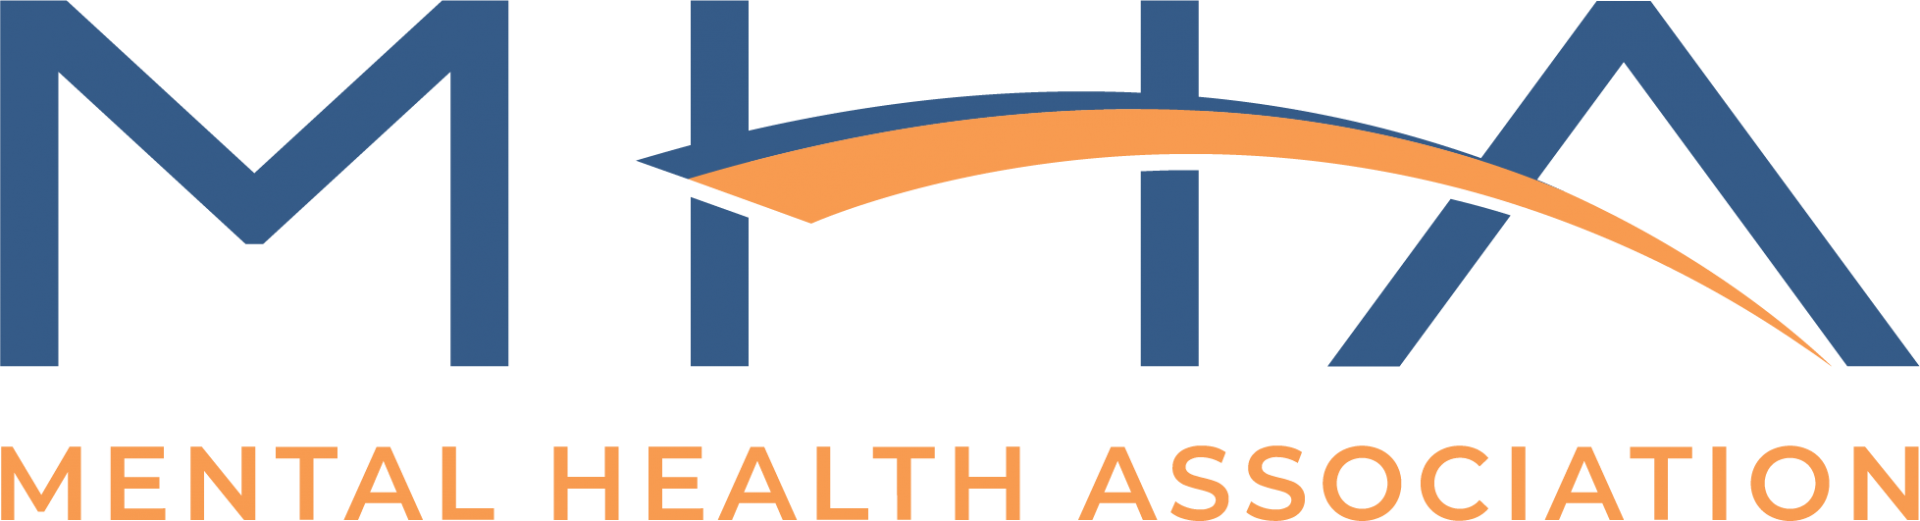 Mental Health Association of Essex and Morris, Inc.